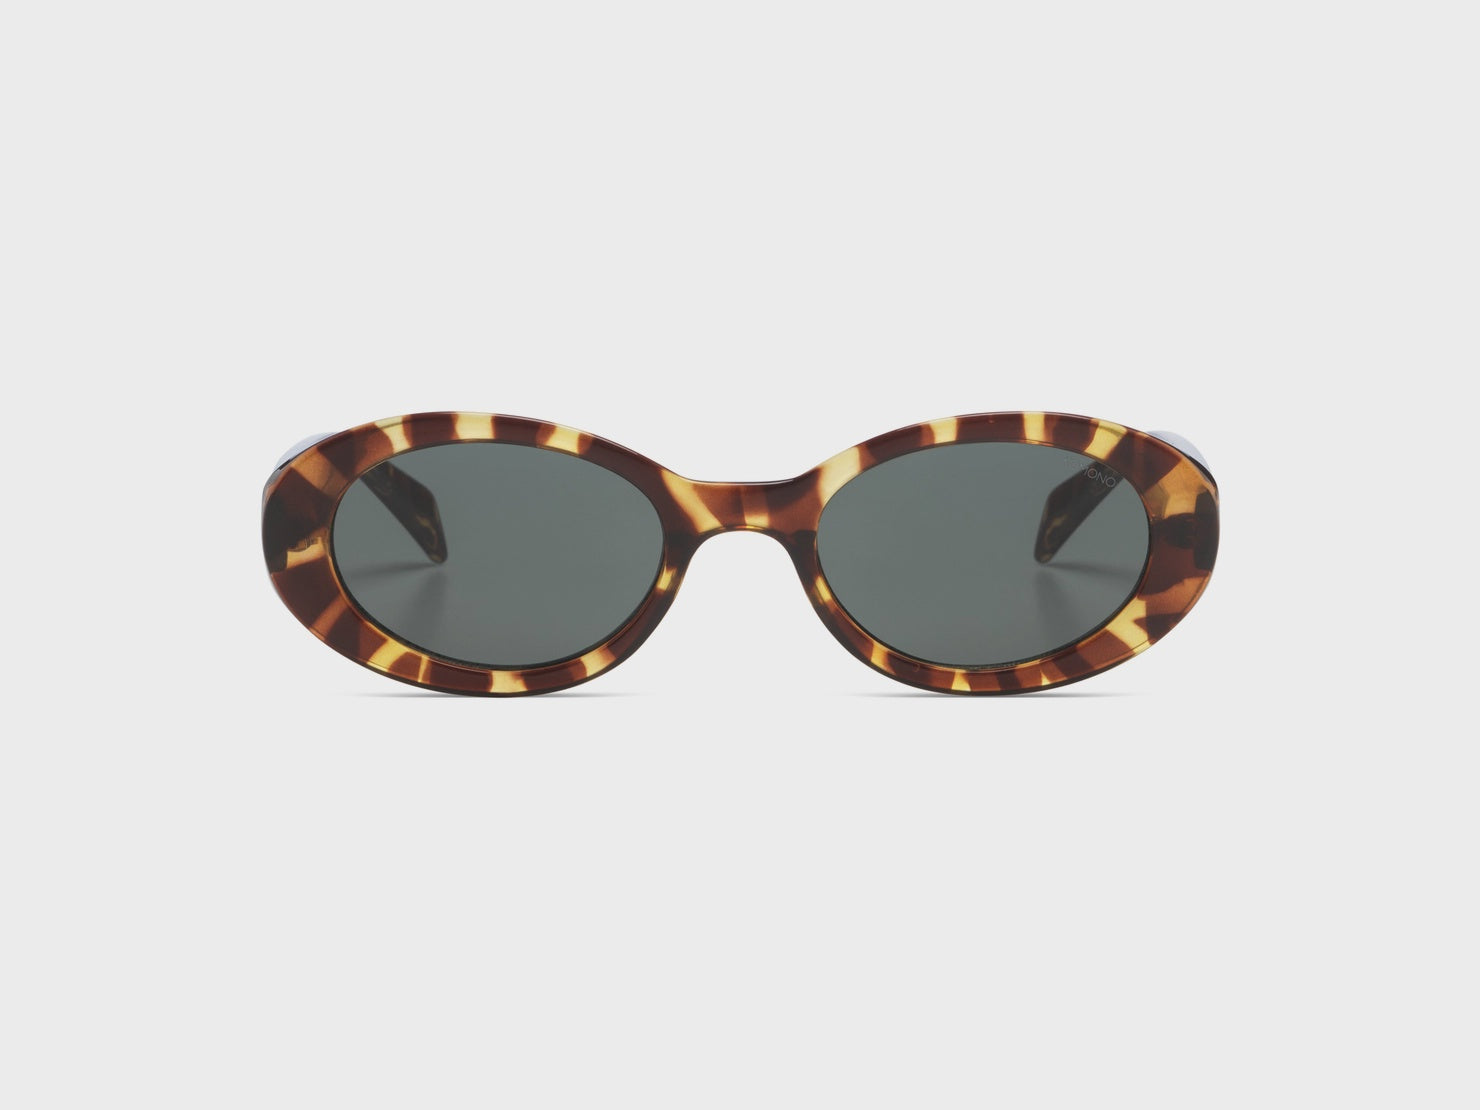 The Ana Tortoise Sunglasses by Komono